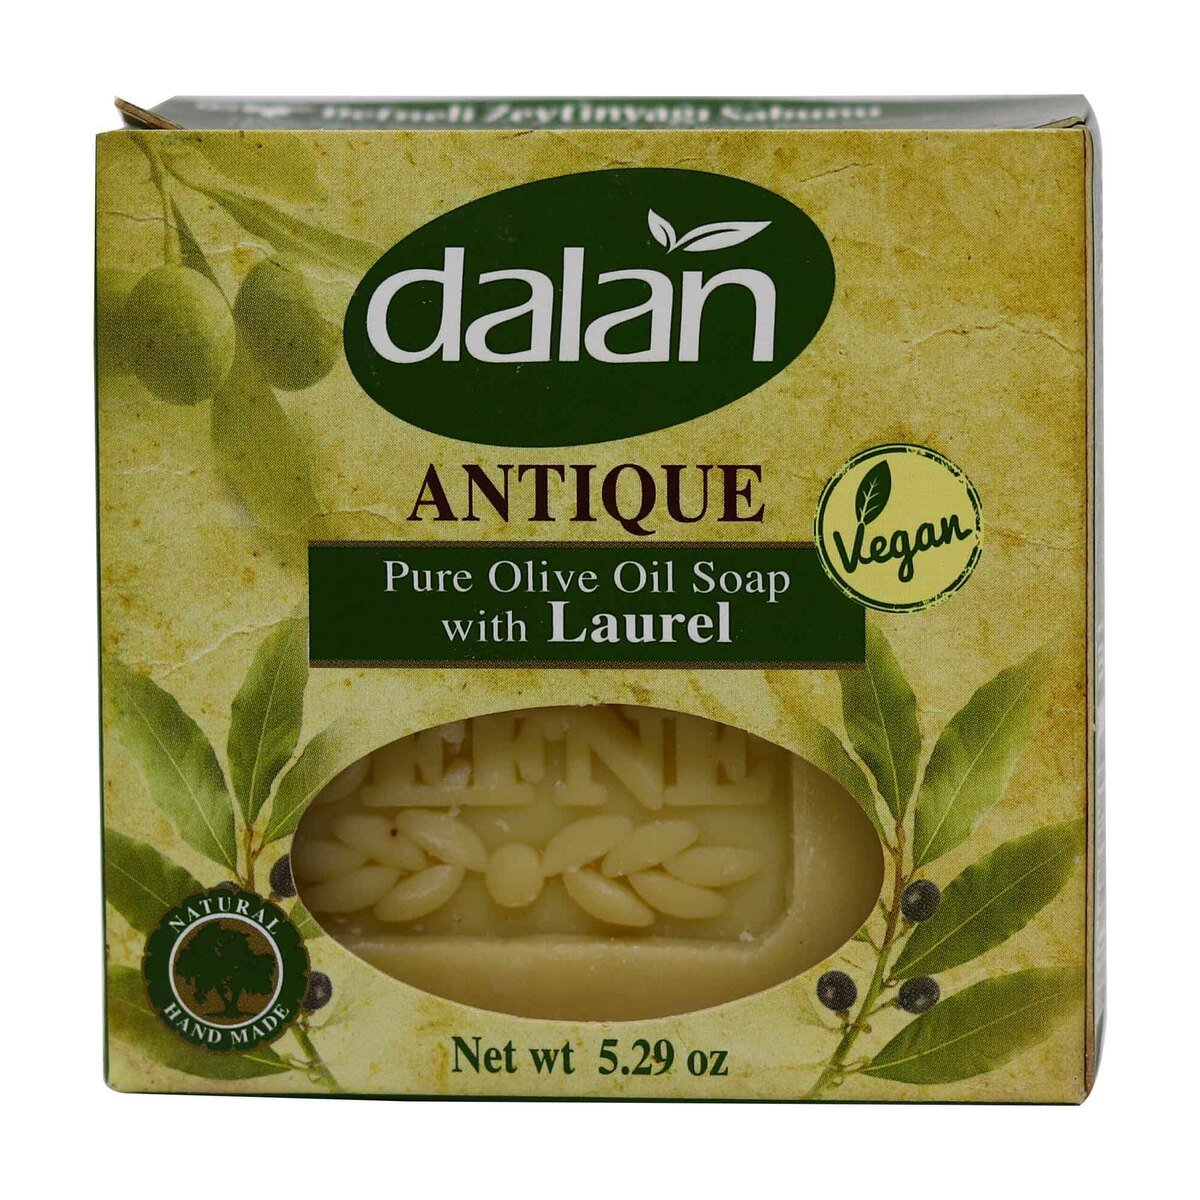 Dalan Antique Pure Olive Oil Soap With Laurel 5.29oz